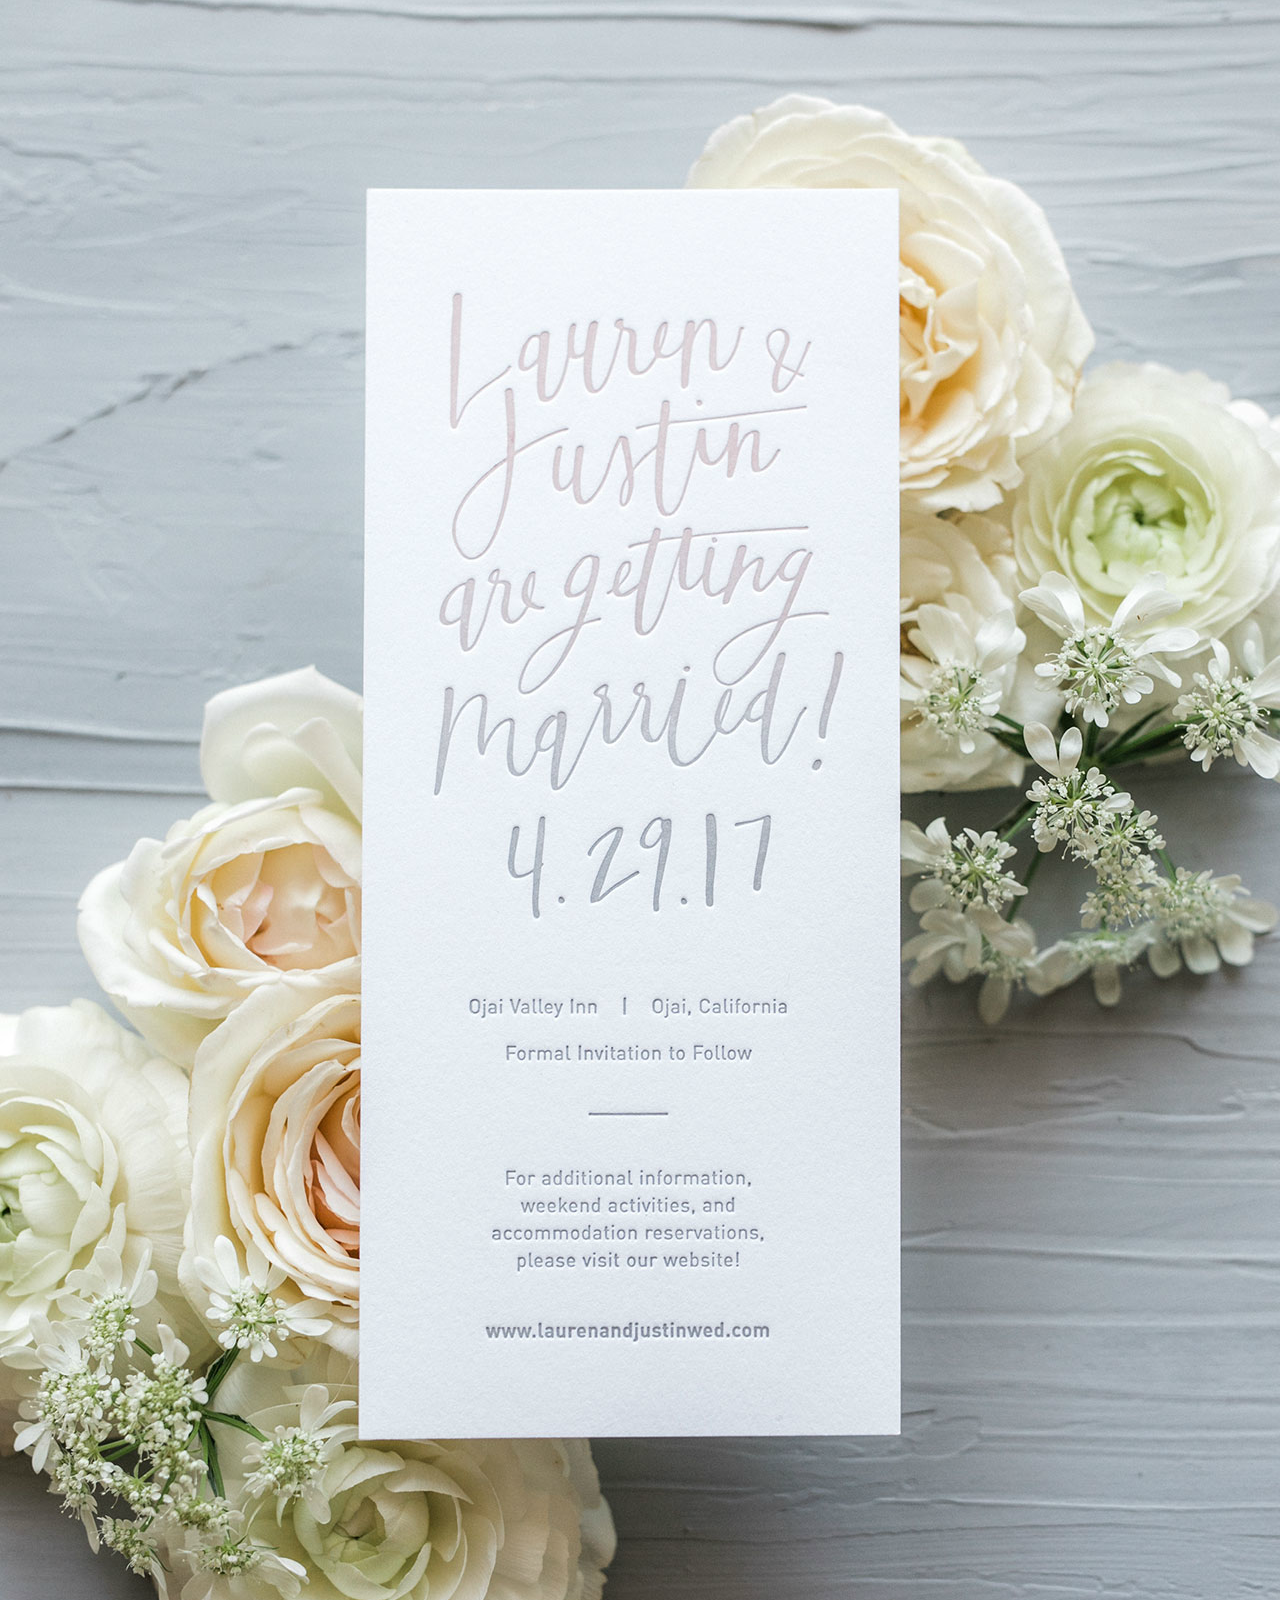 Blush and Gray Desert Wedding Invitations by Goodheart Design